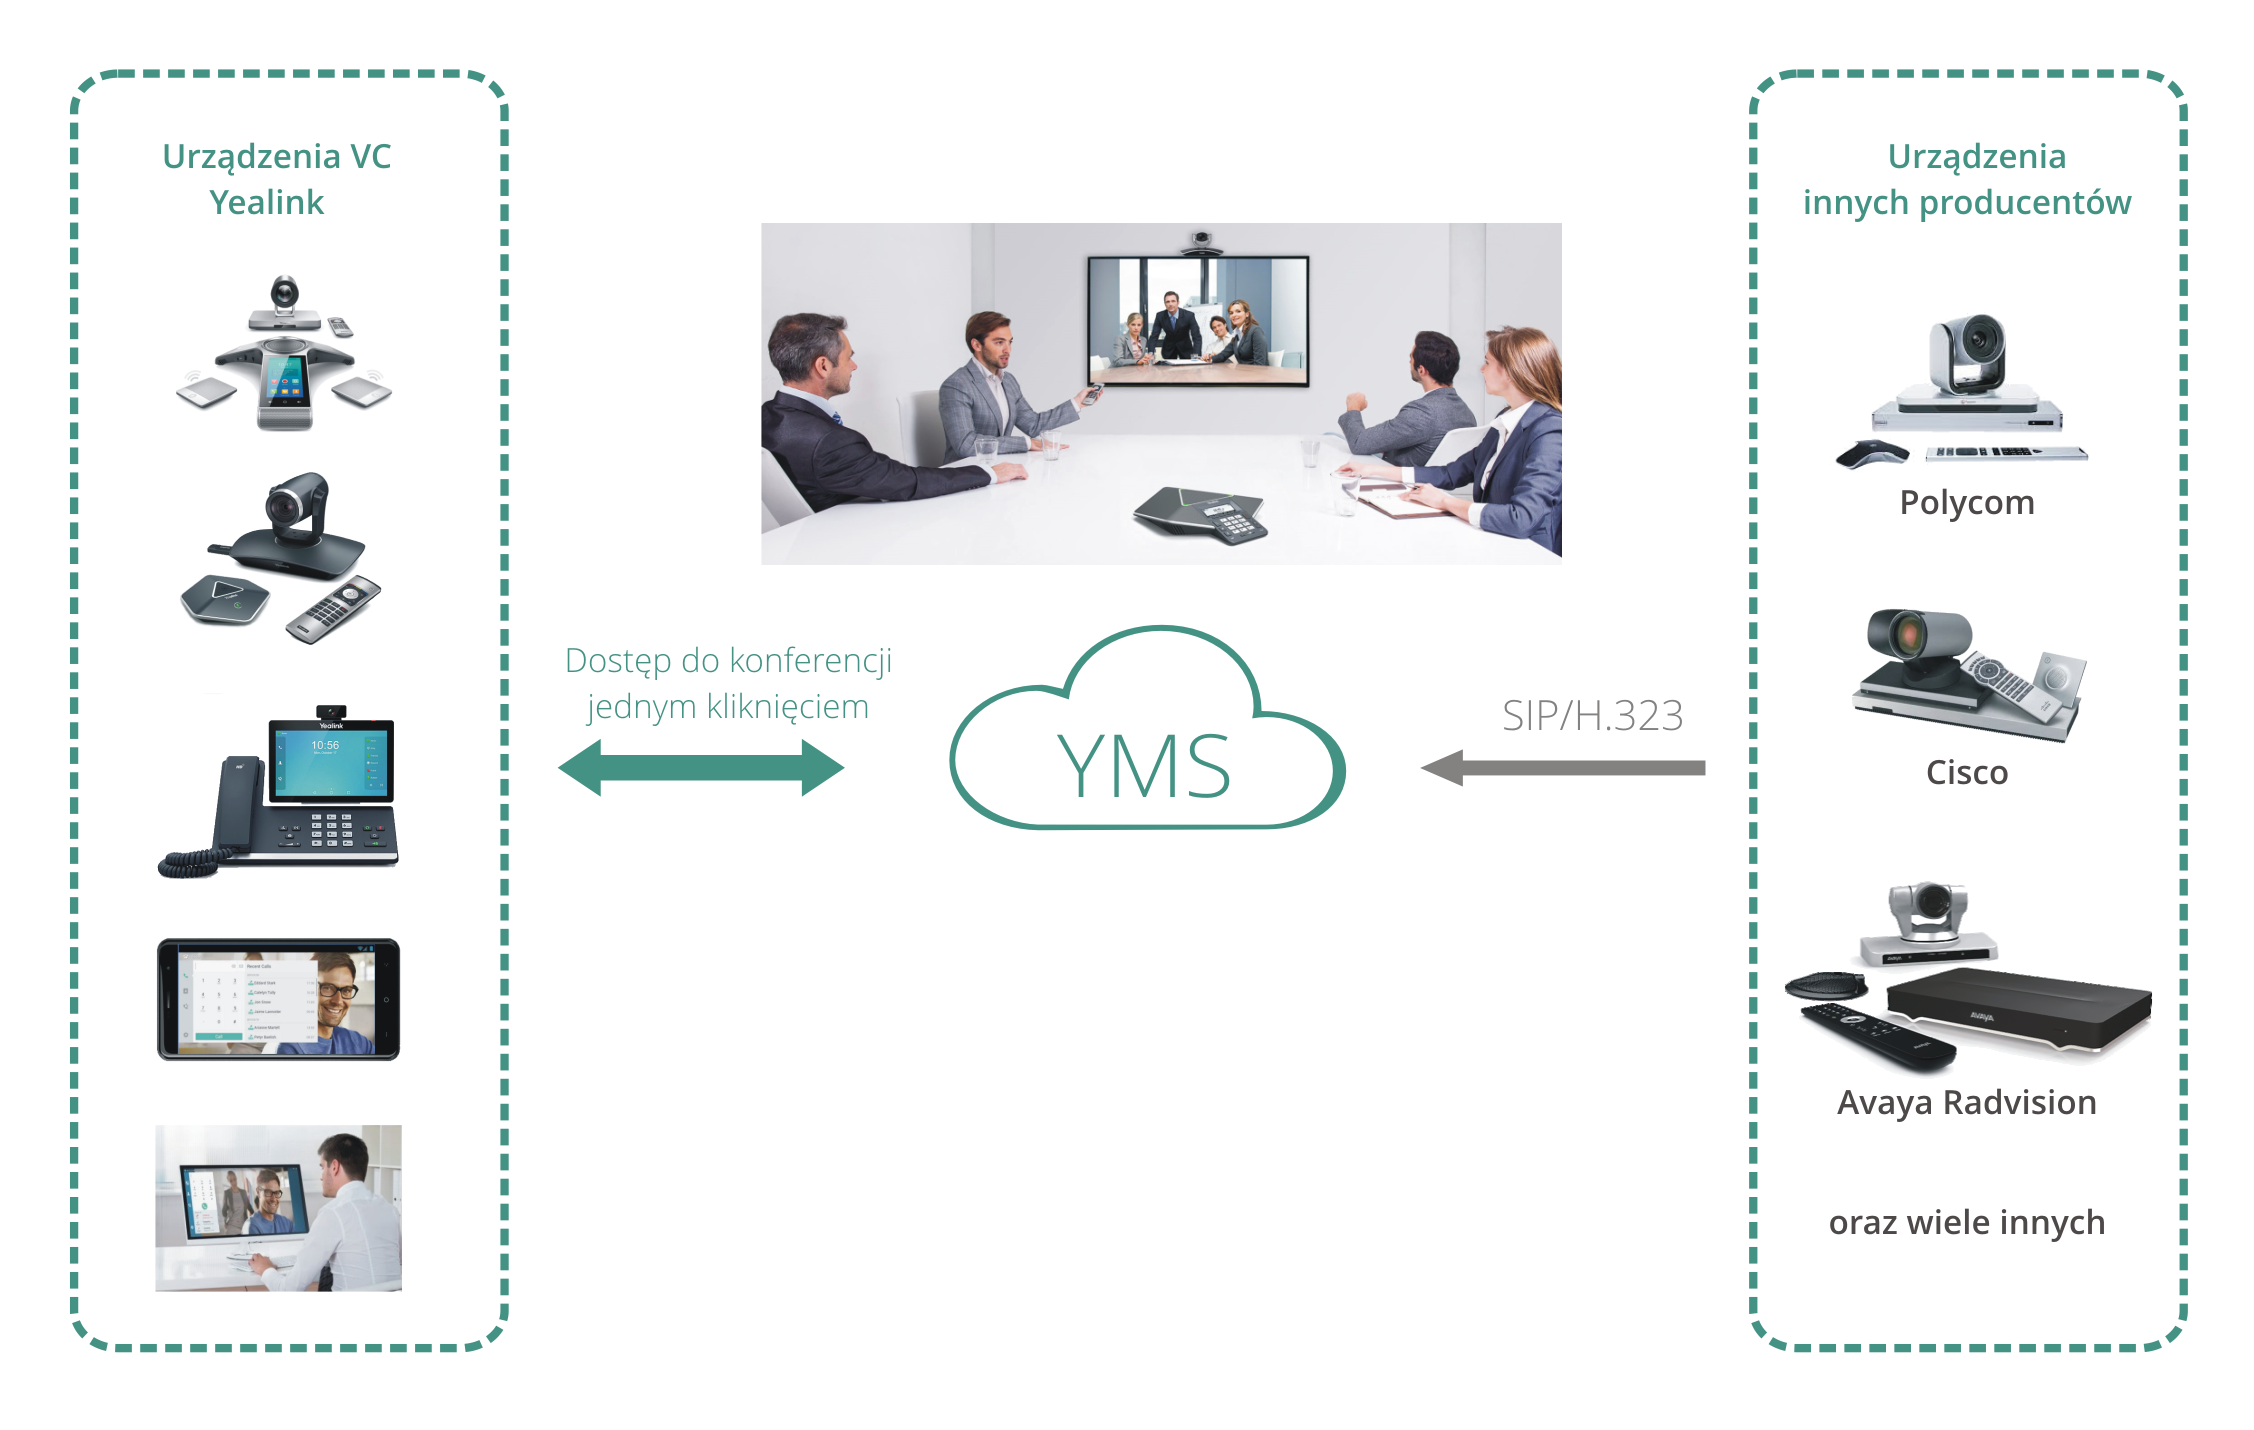 Yealink Meeting Server (YMS)